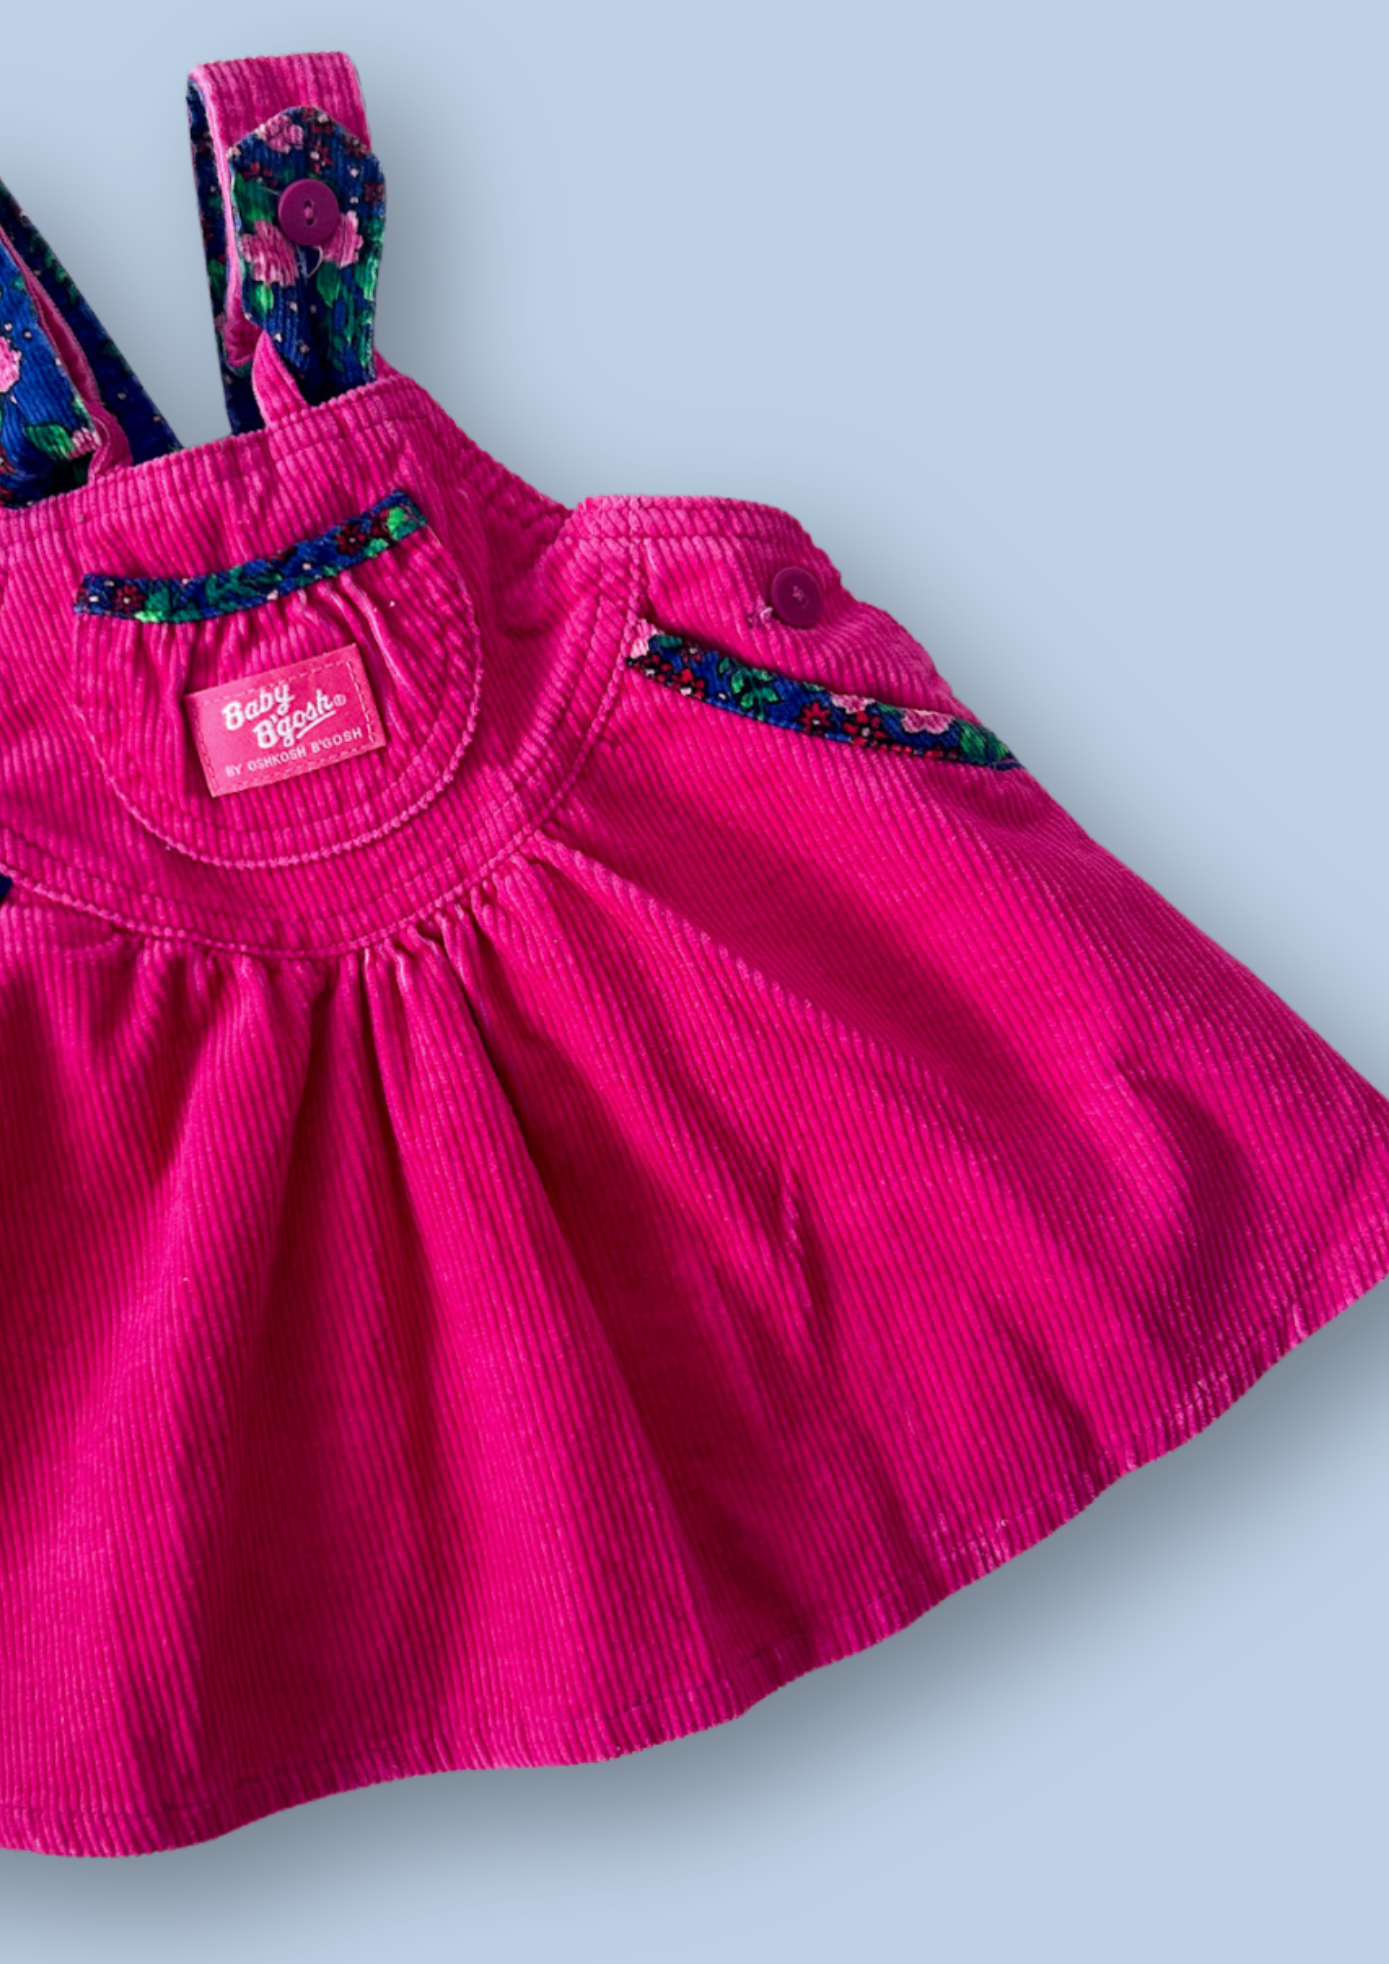 Vintage OshKosh Pink & Floral Print  Dress, approx 12 months